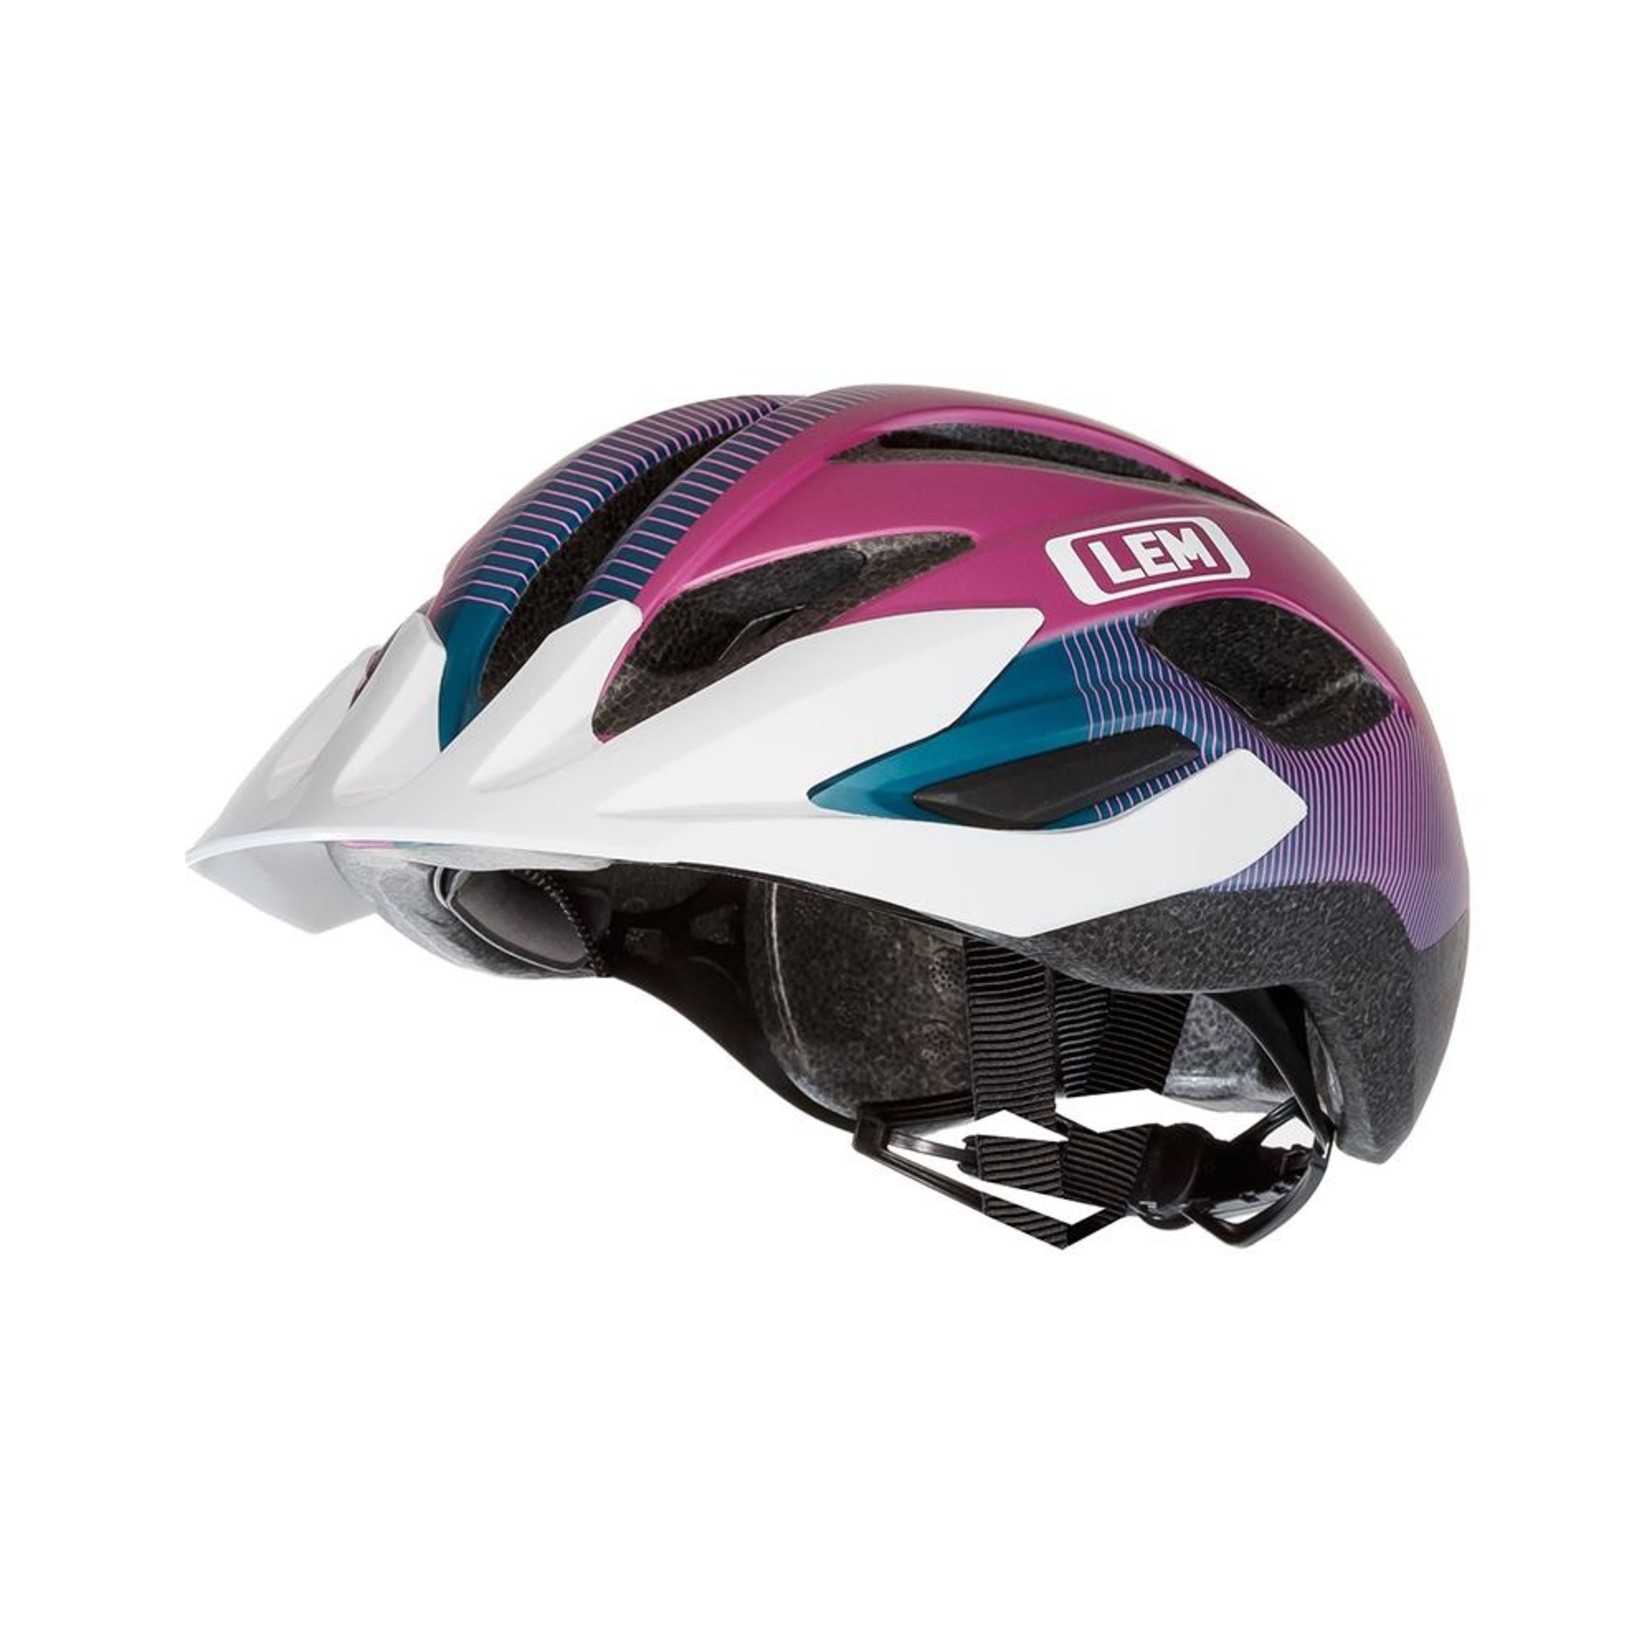 Boulevard Commuter Bike Helmet